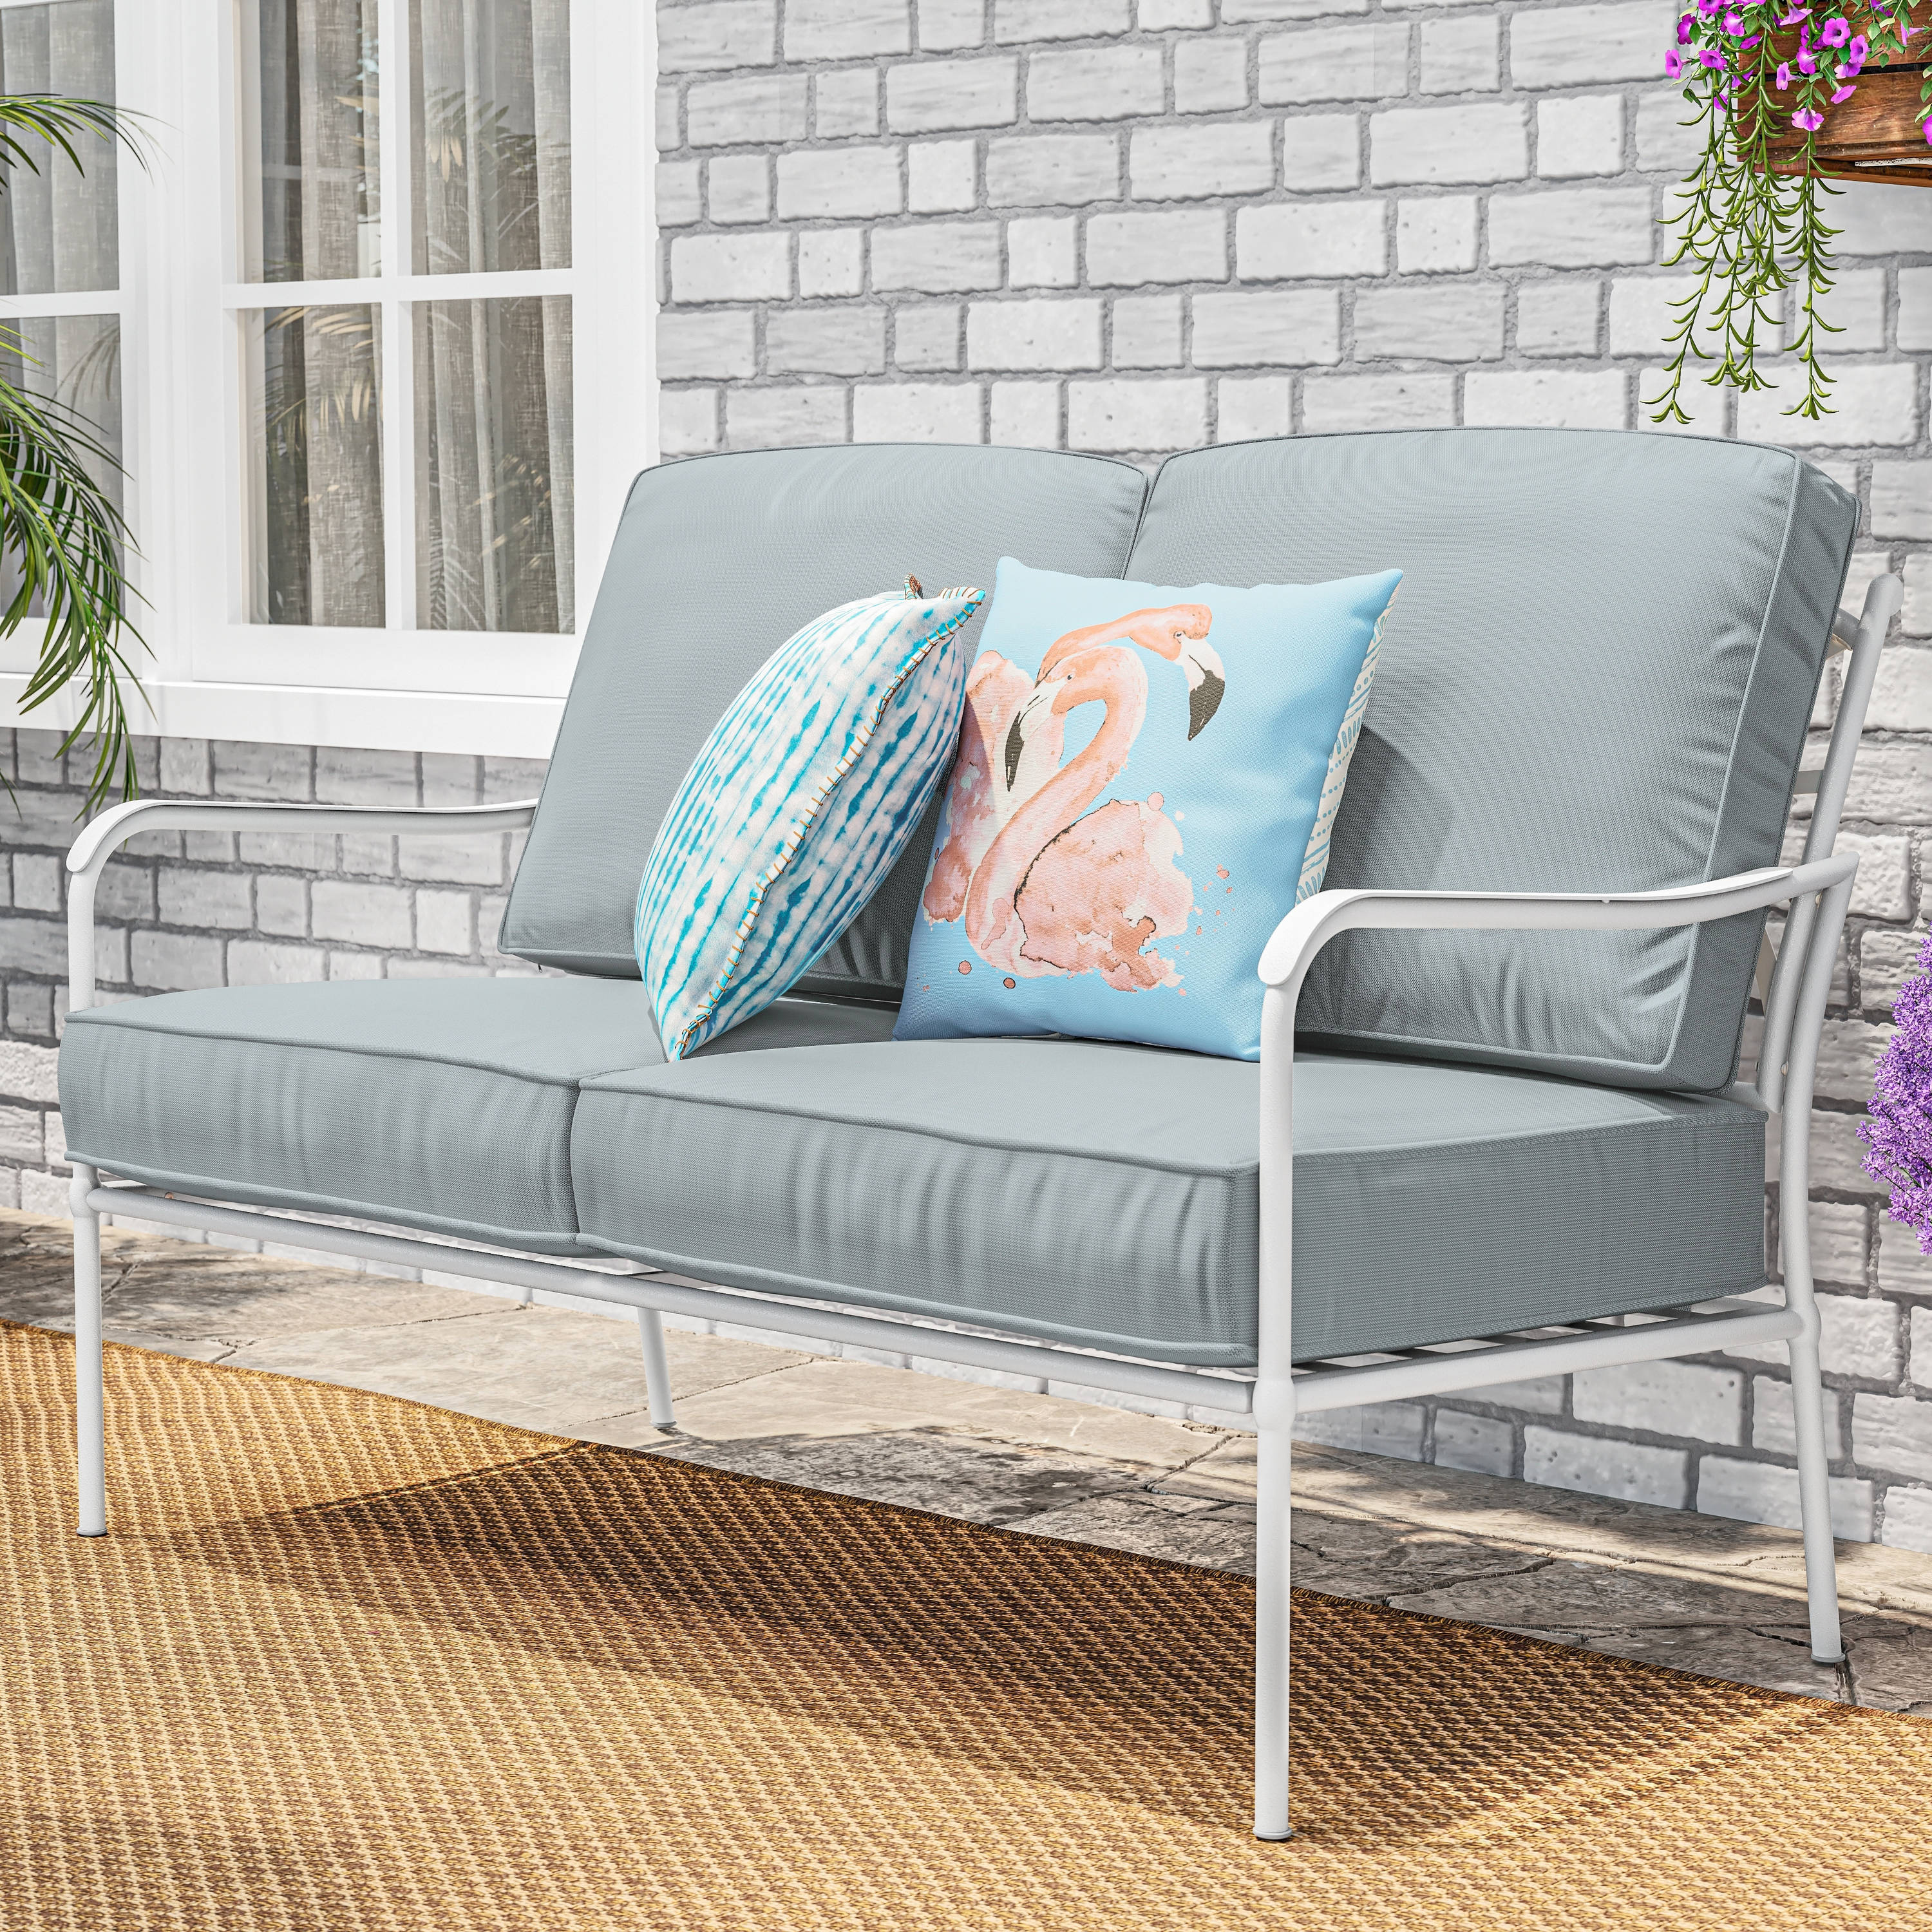 Set of 2 Joia slate grey washcloths 15x21cm , Furniture for Professionals  - Decoration Brands